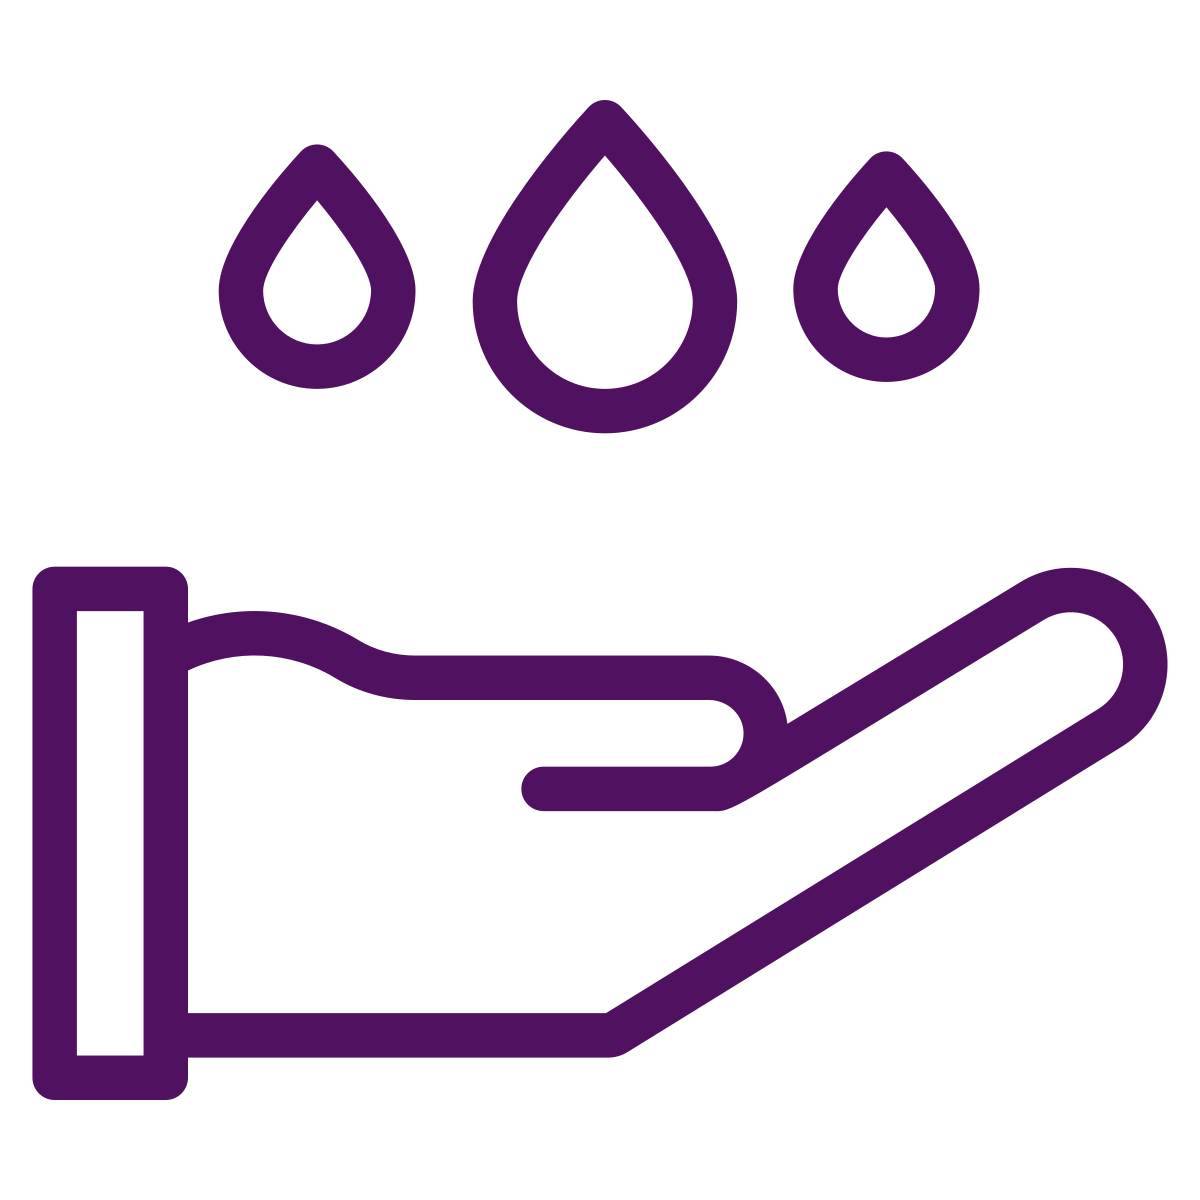 A graphic depicting شخص نطمح إلى توفير مياه الشرب المأمونة لهم تصل إلى لمدة 15 عاماً 